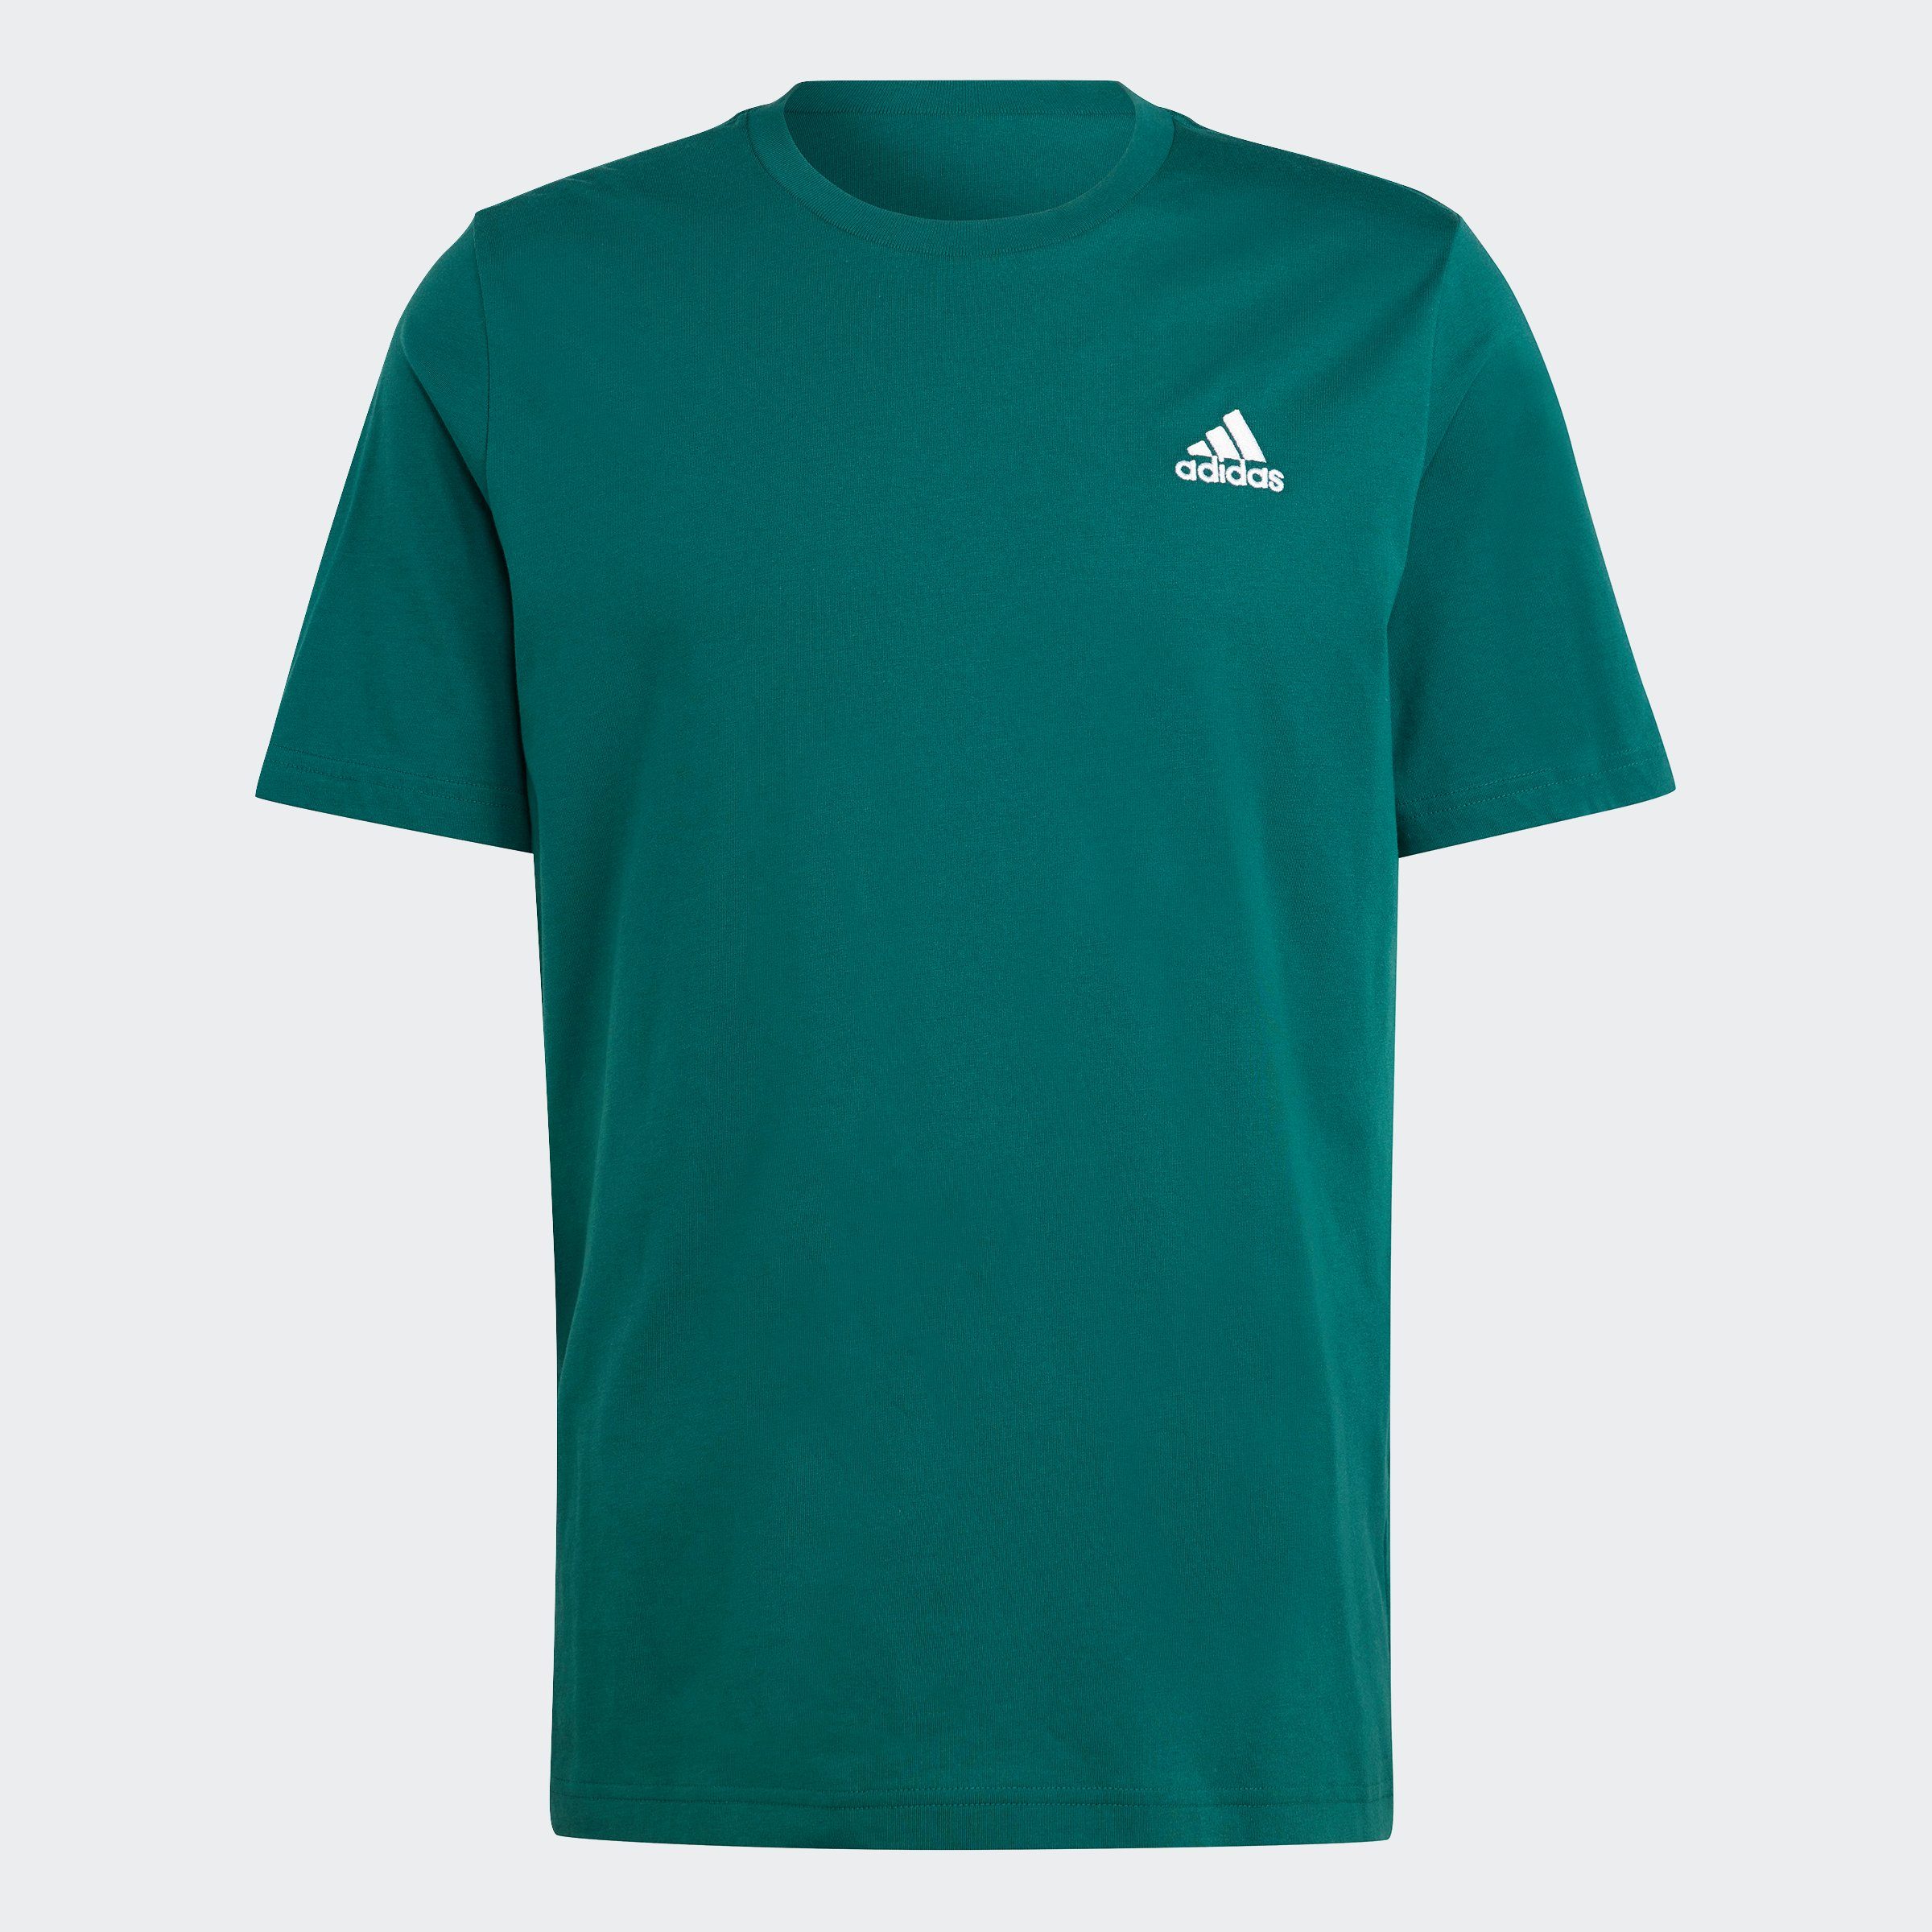 Green ESSENTIALS Sportswear SMALL LOGO T-Shirt Collegiate EMBROIDERED SINGLE JERSEY adidas